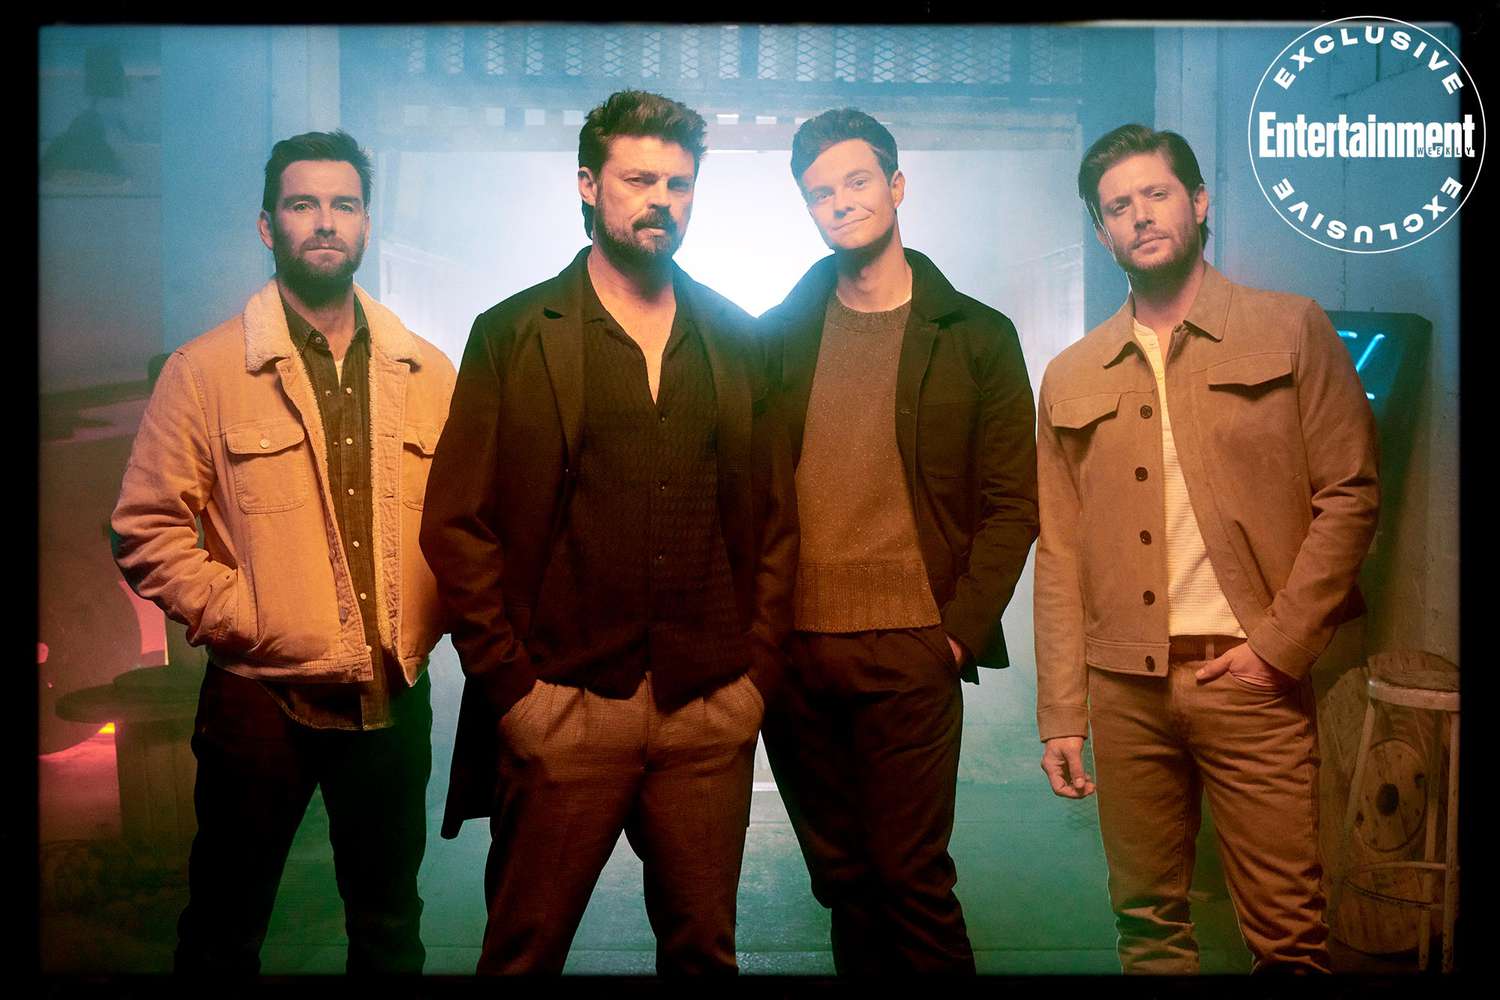 Hell-raisers: The Boys season 3 shakes up prestige TV with superhero debauchery